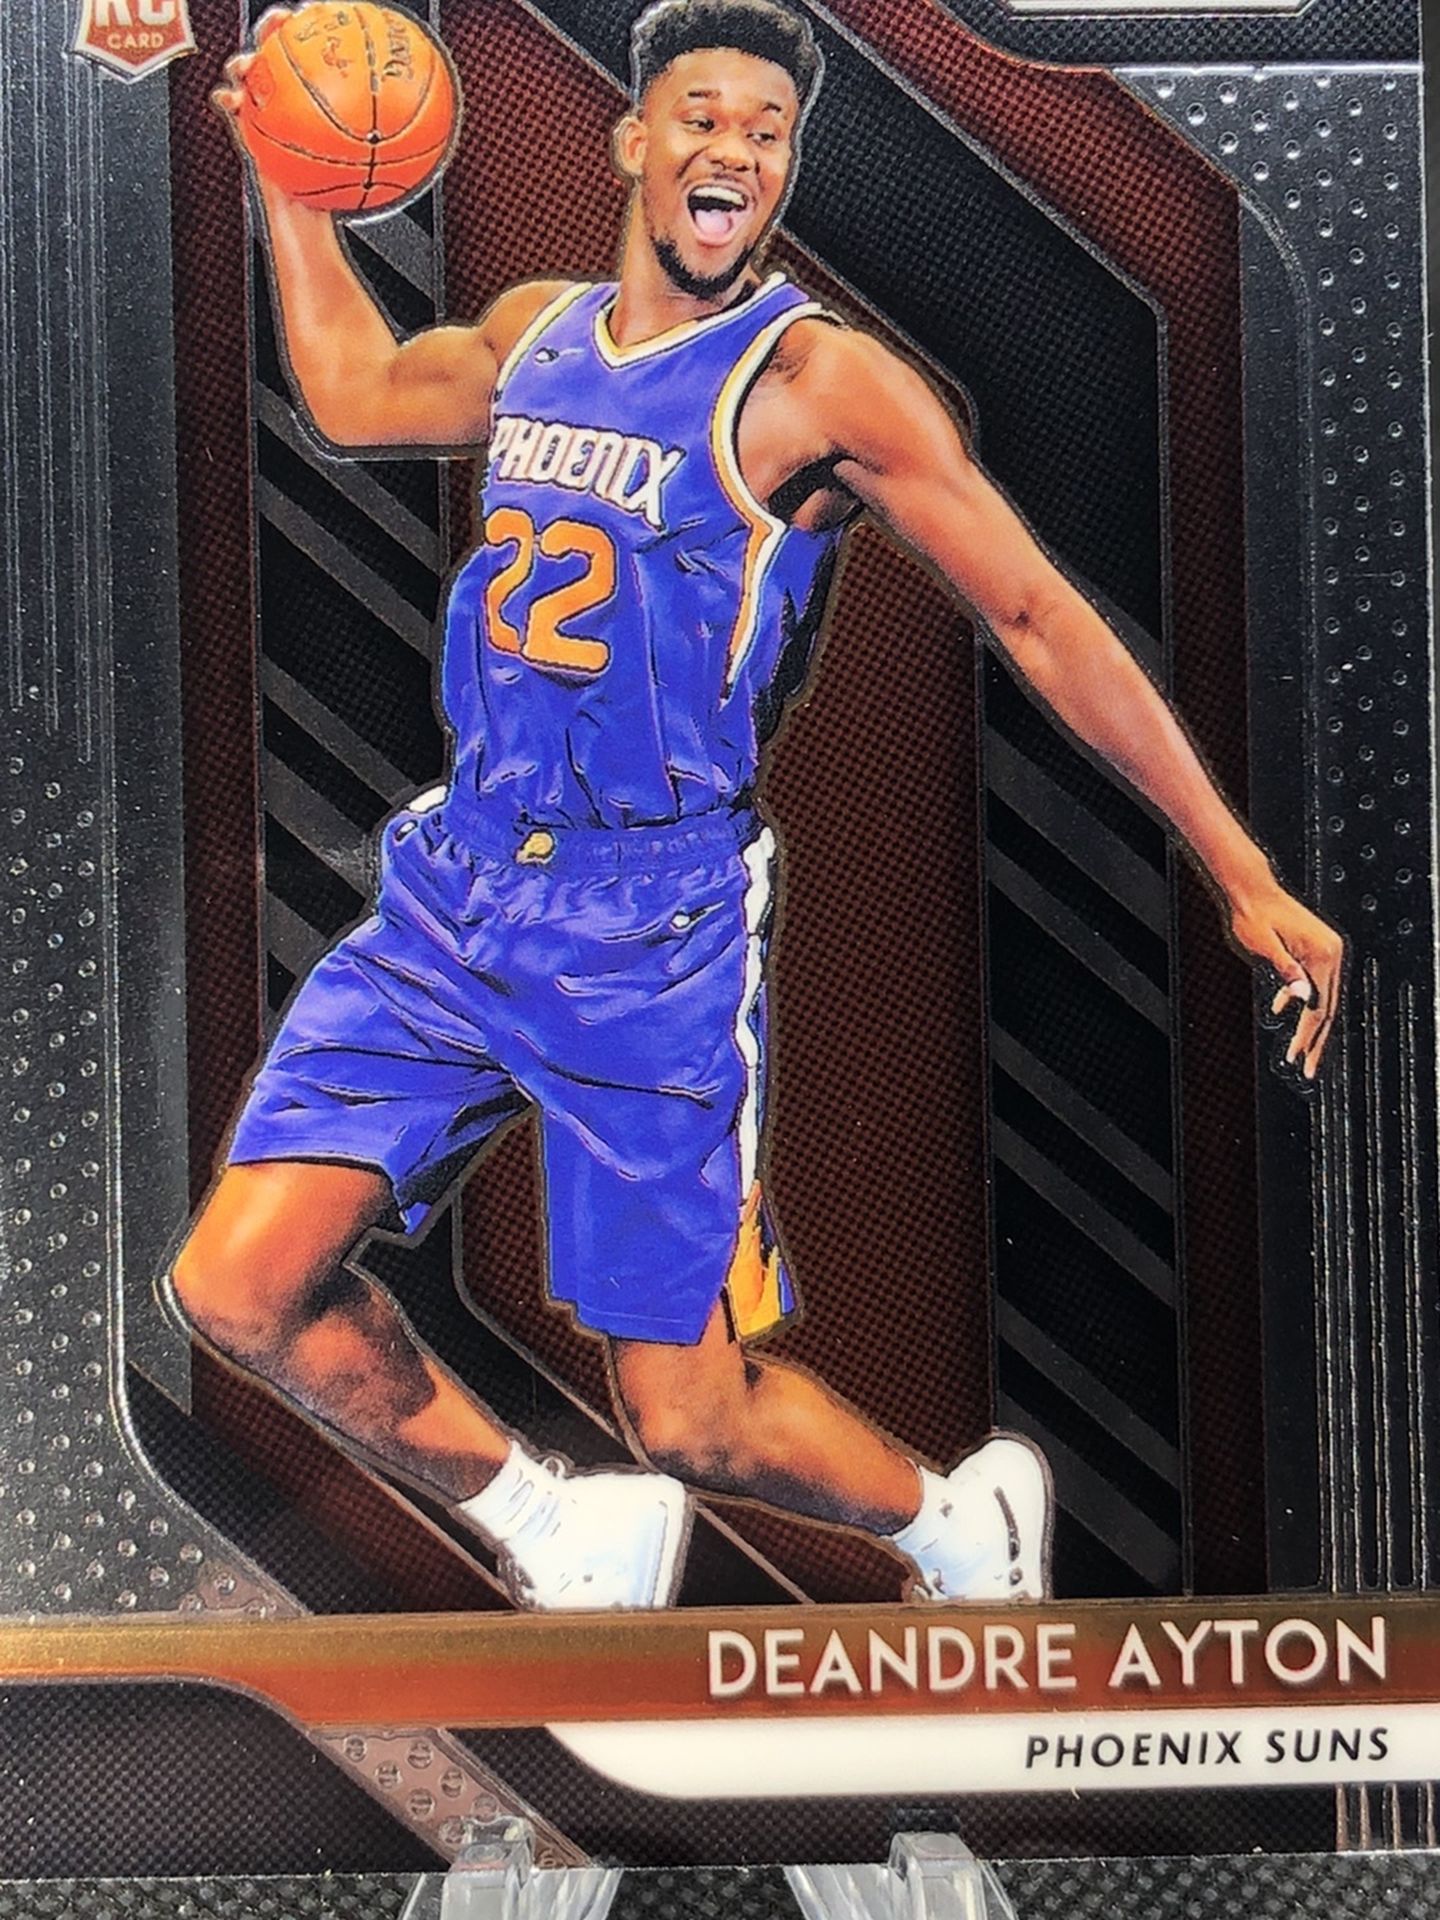 Deandre Ayton 2018-19 Prizm Rc Rookie Suns Basketball